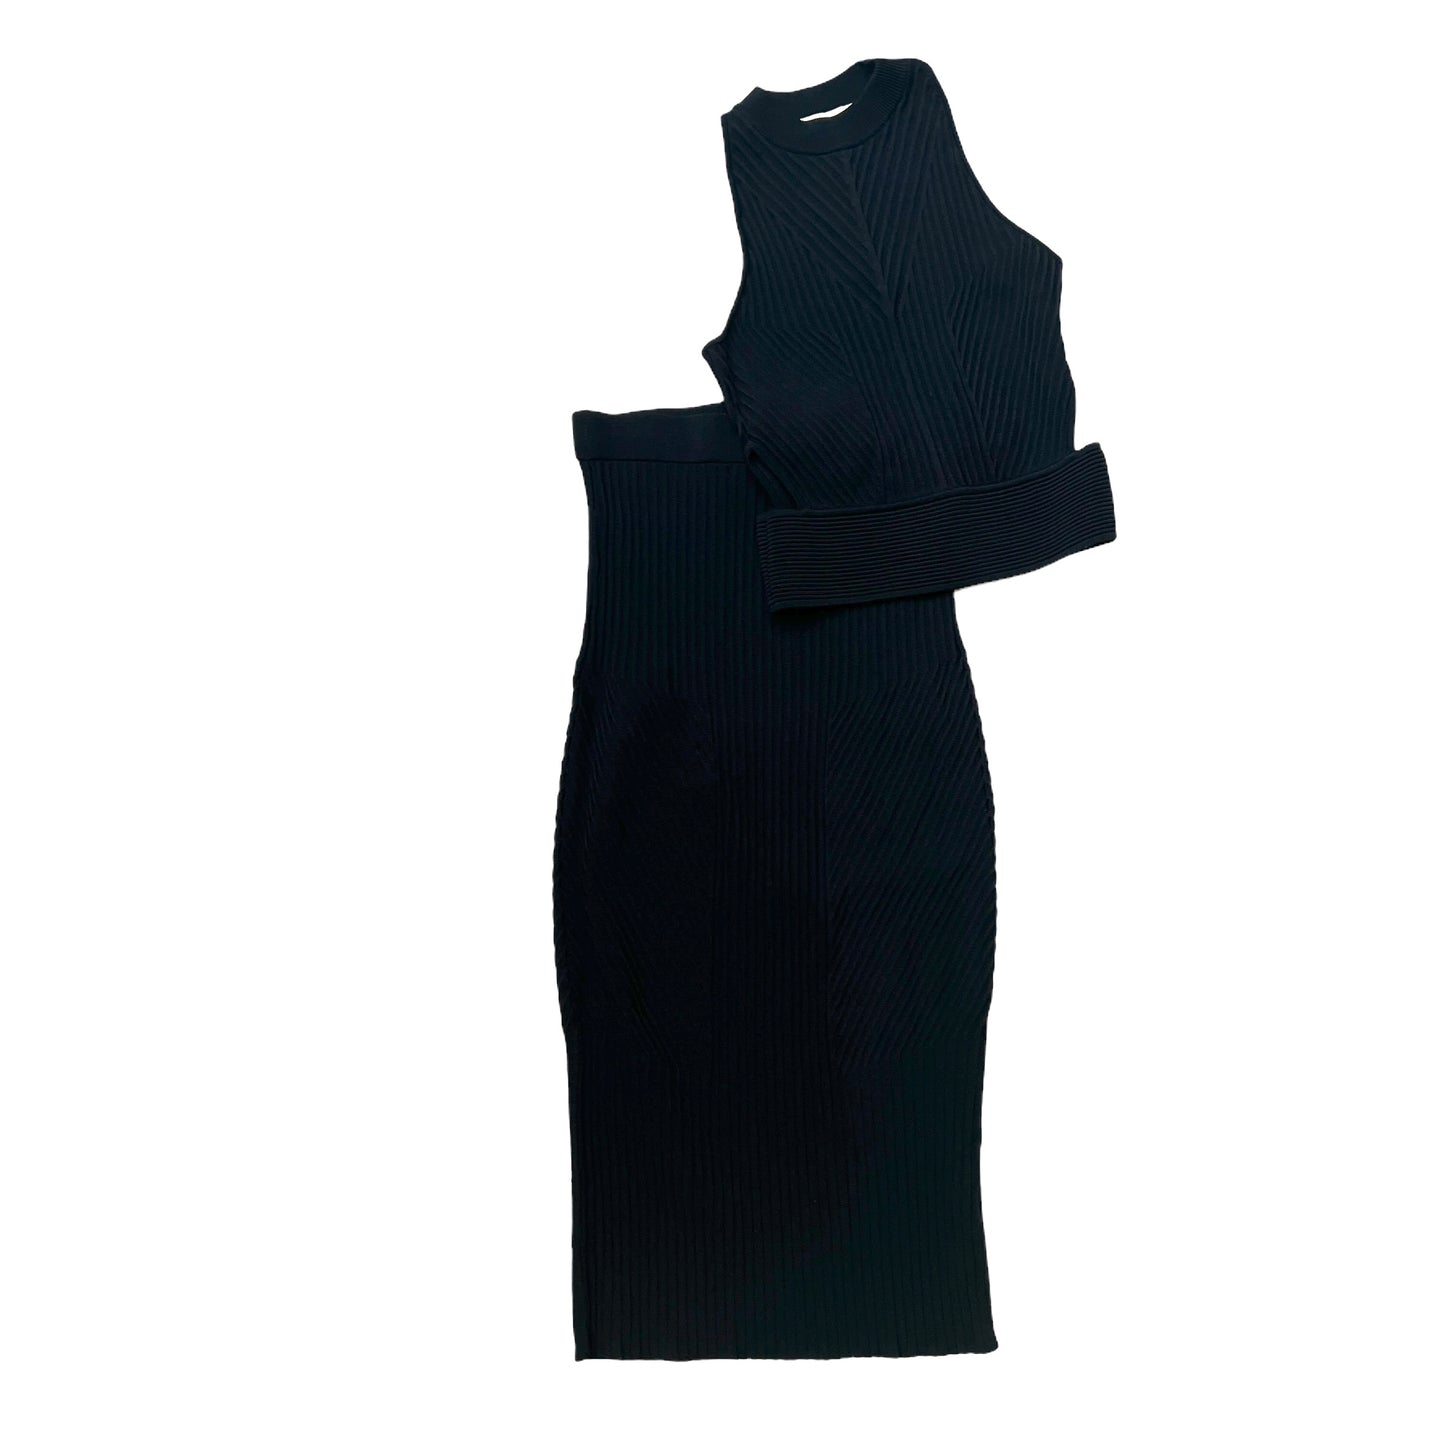 Black Cropped Top & Skirt Set - XS/S